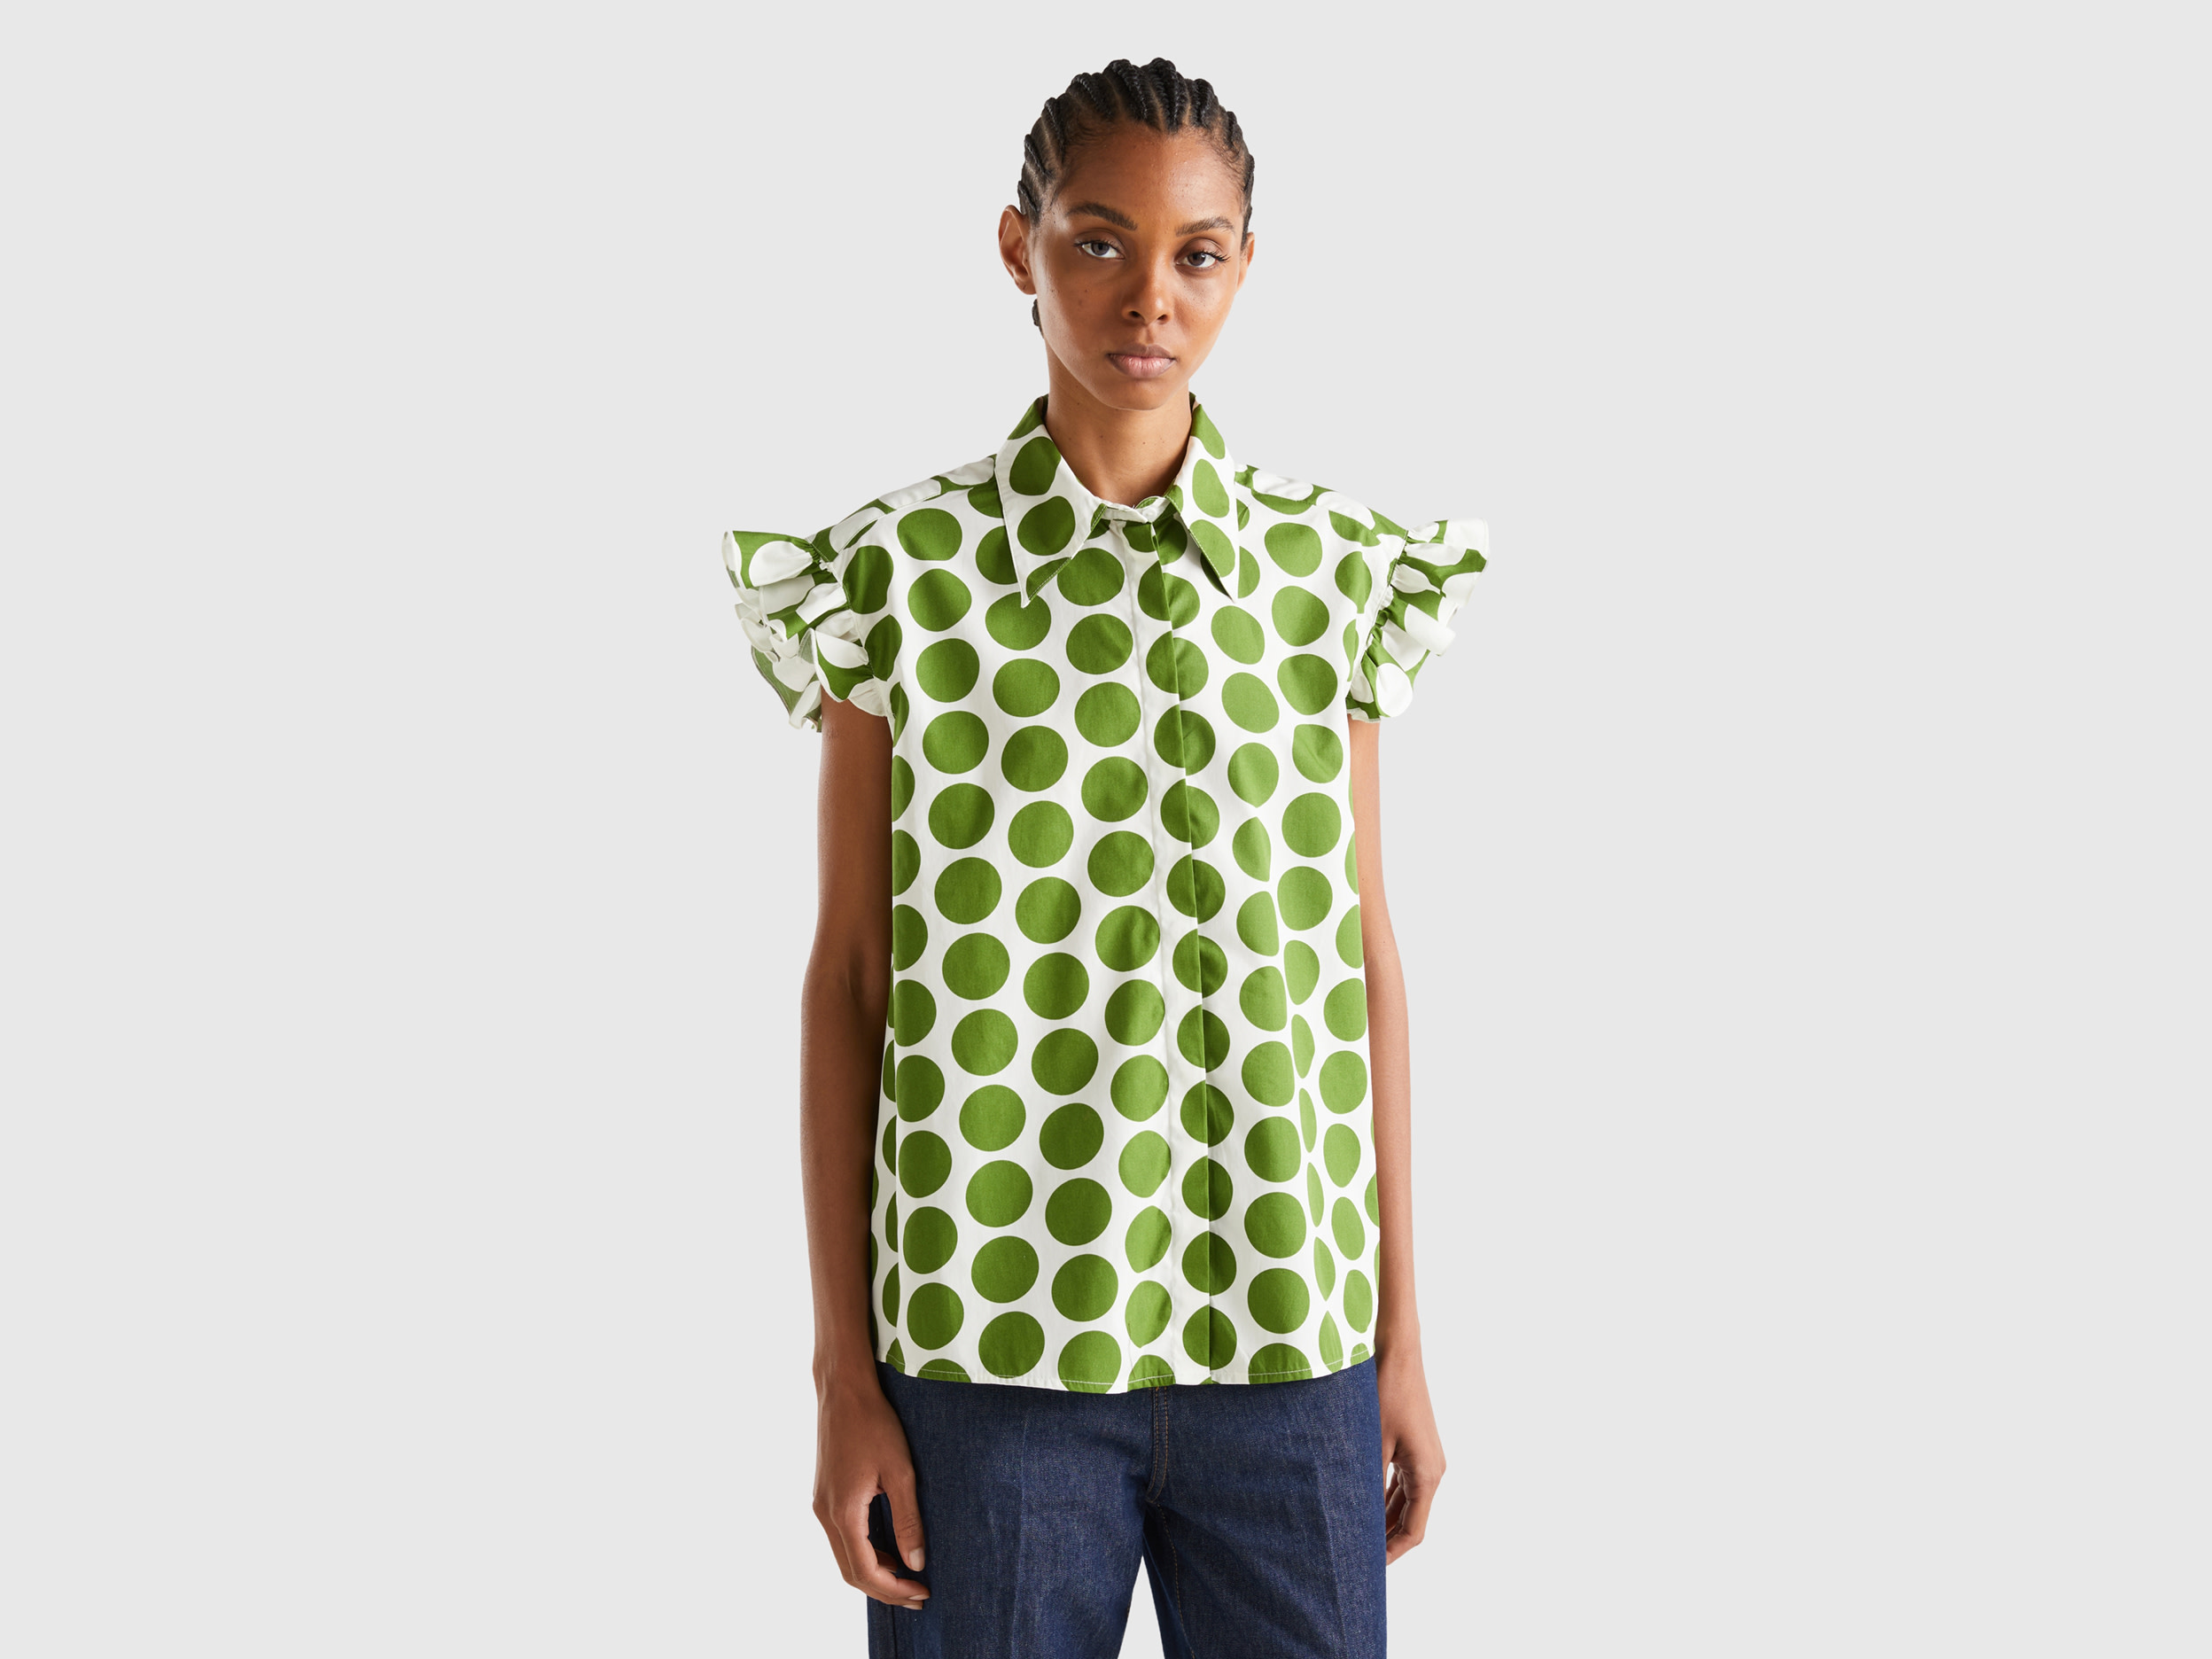 Benetton, Sleeveless Polka Dot Shirt, size M, Green, Women